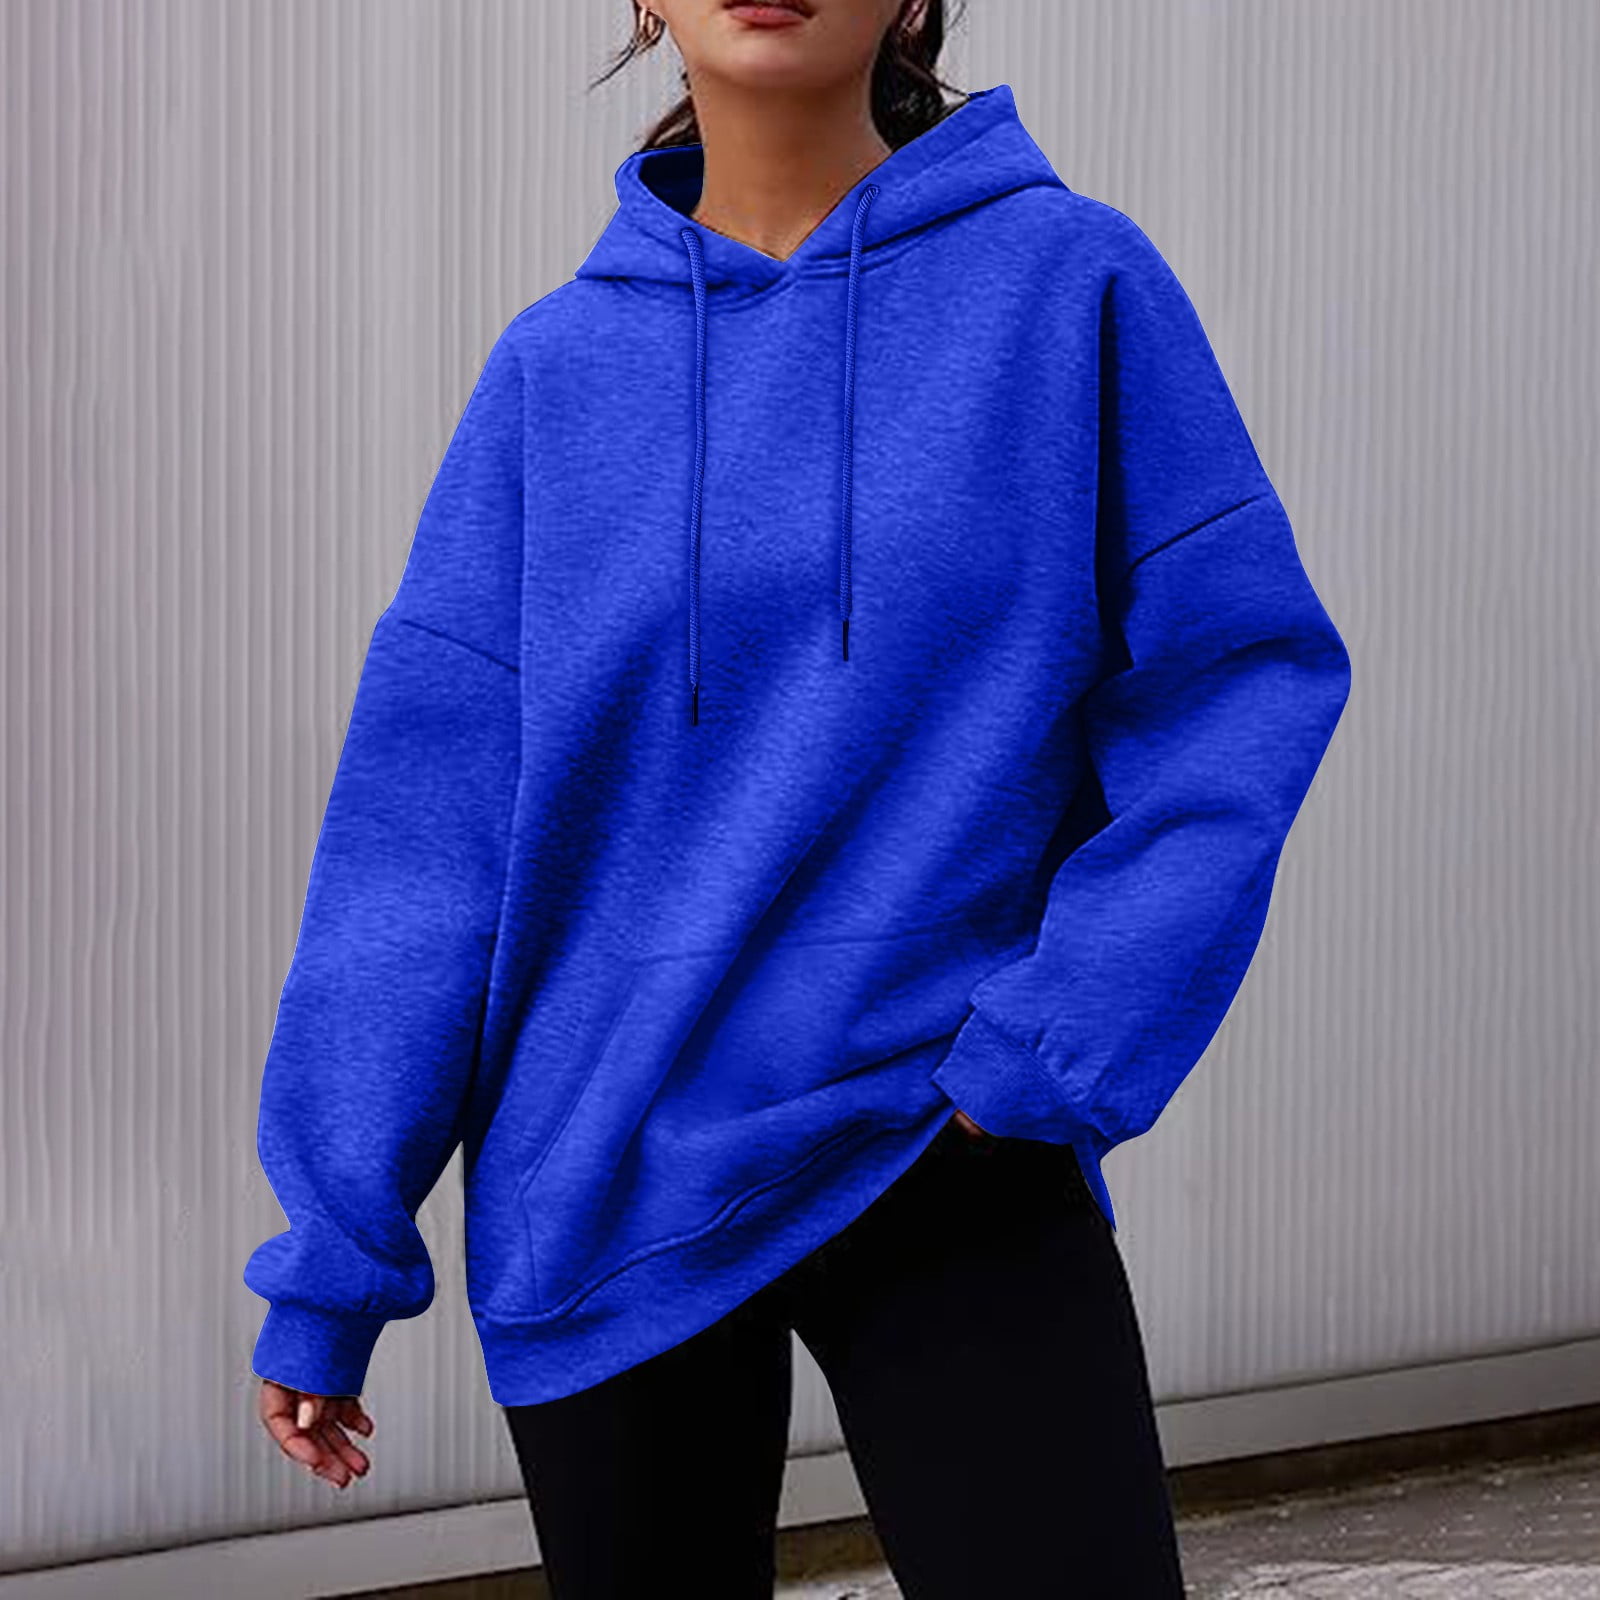 Ydkzymd Oversized Sweatshirt Women Solid Color Blouses Long Sleeve ...